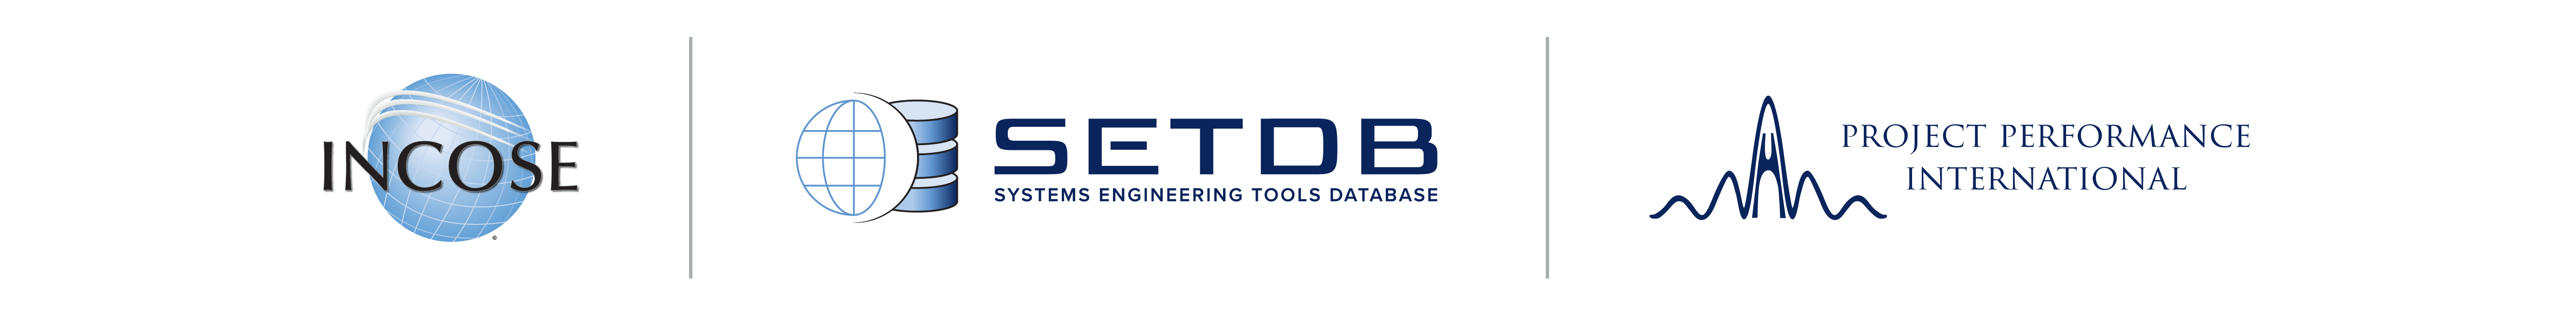 SETDB Logo Horizontal